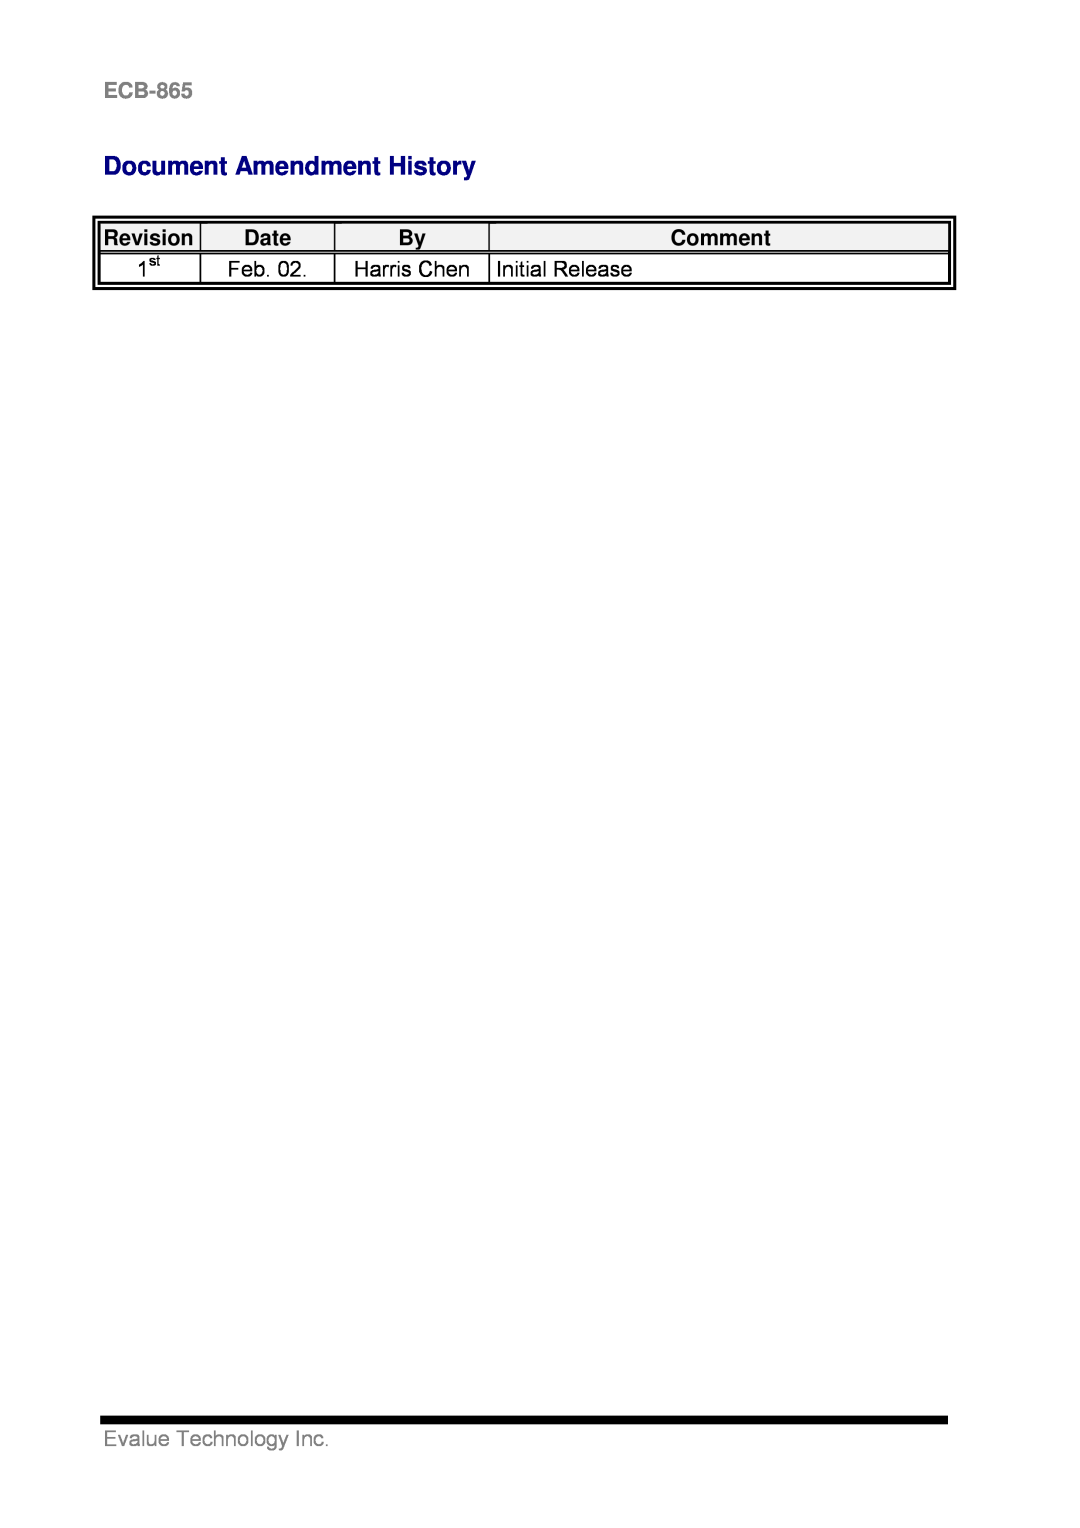 Intel ECB-865 user manual Document Amendment History, Revision, Date, Comment, Feb, Harris Chen, Initial Release 